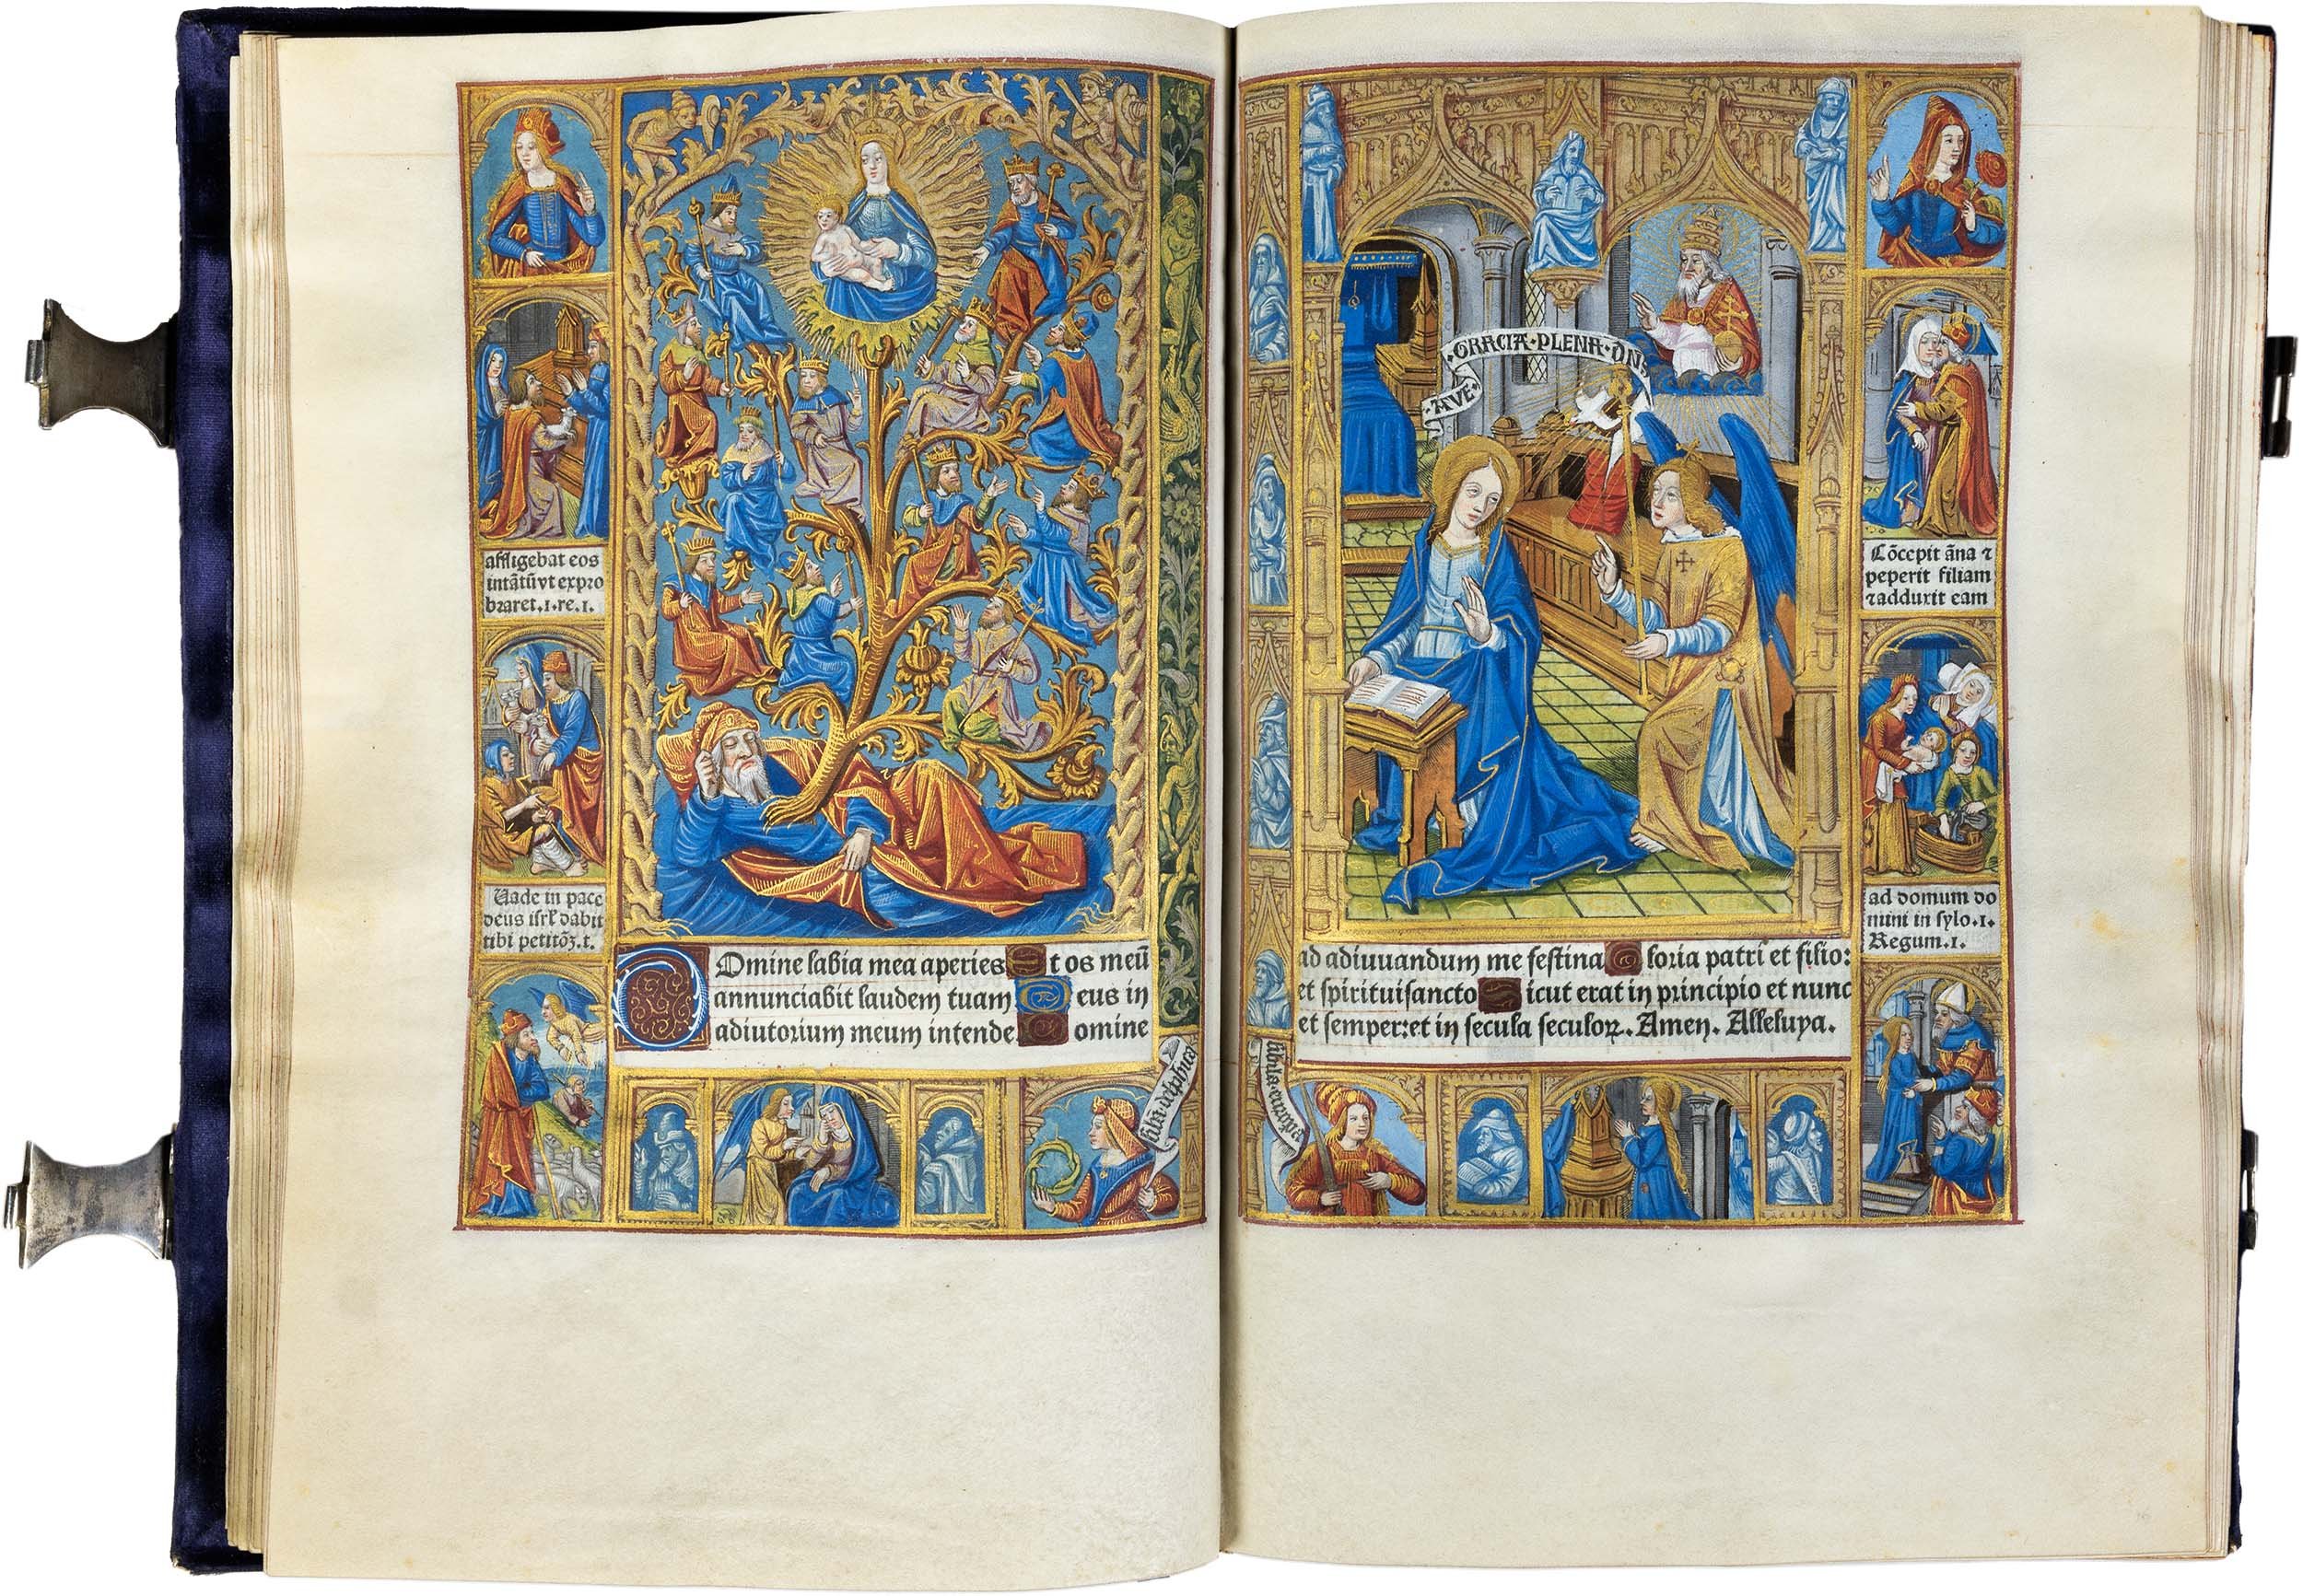 horae-bmv-16.9.1498-printed-book-of-hours-pigouchet-vostre-calixto crotus-illuminated-vellum-doheny-arcana-25.jpg